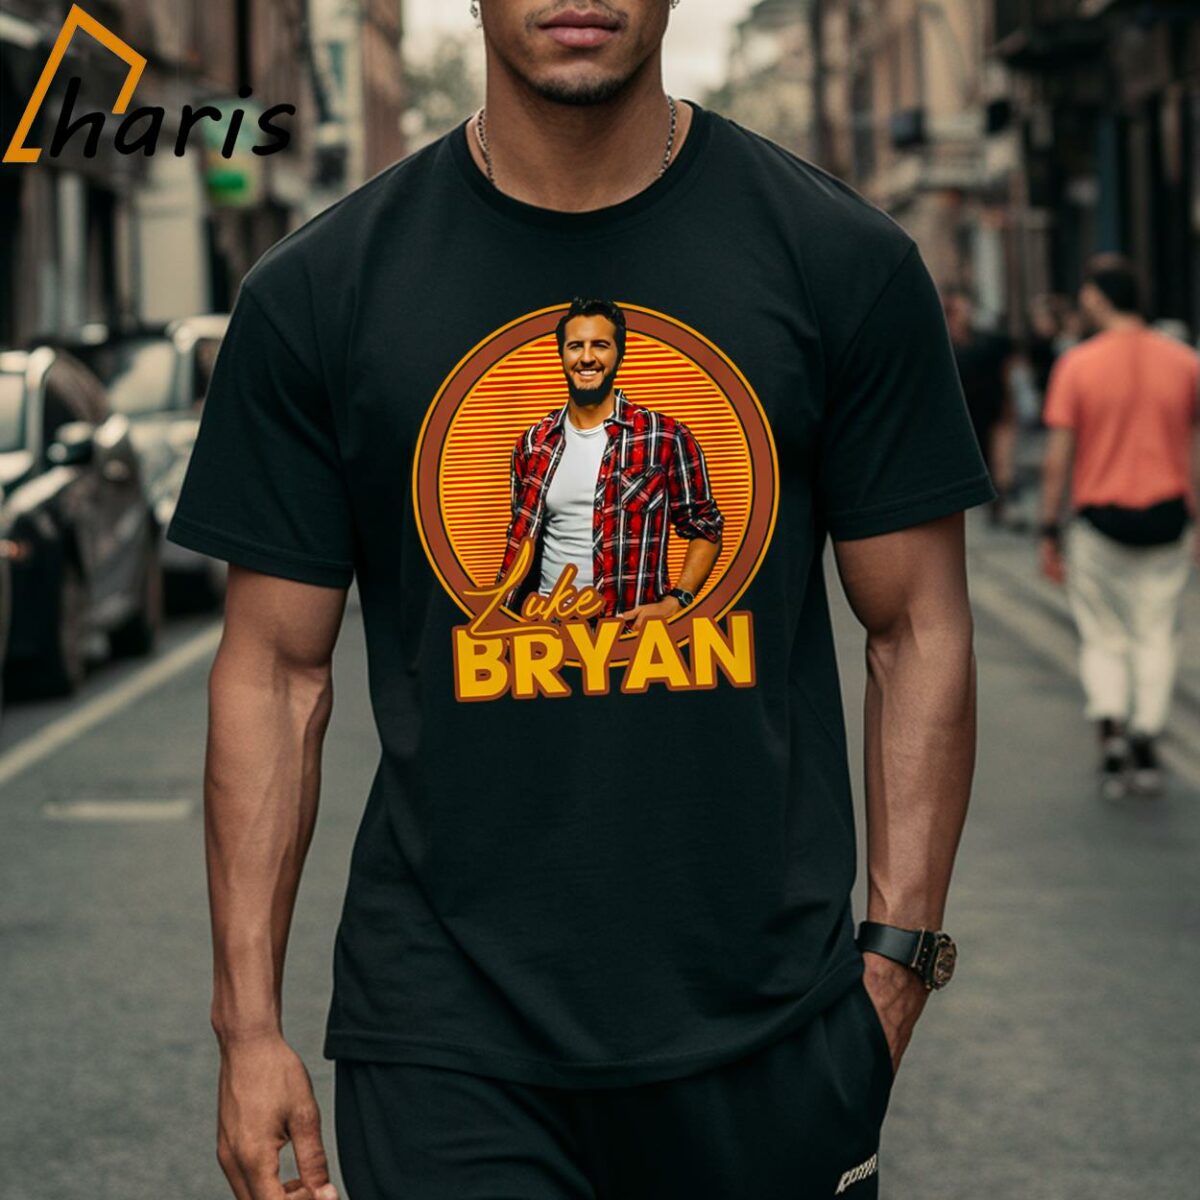 Luke Bryan T shirt Luke Bryan Tour Shirts 2 Shirt